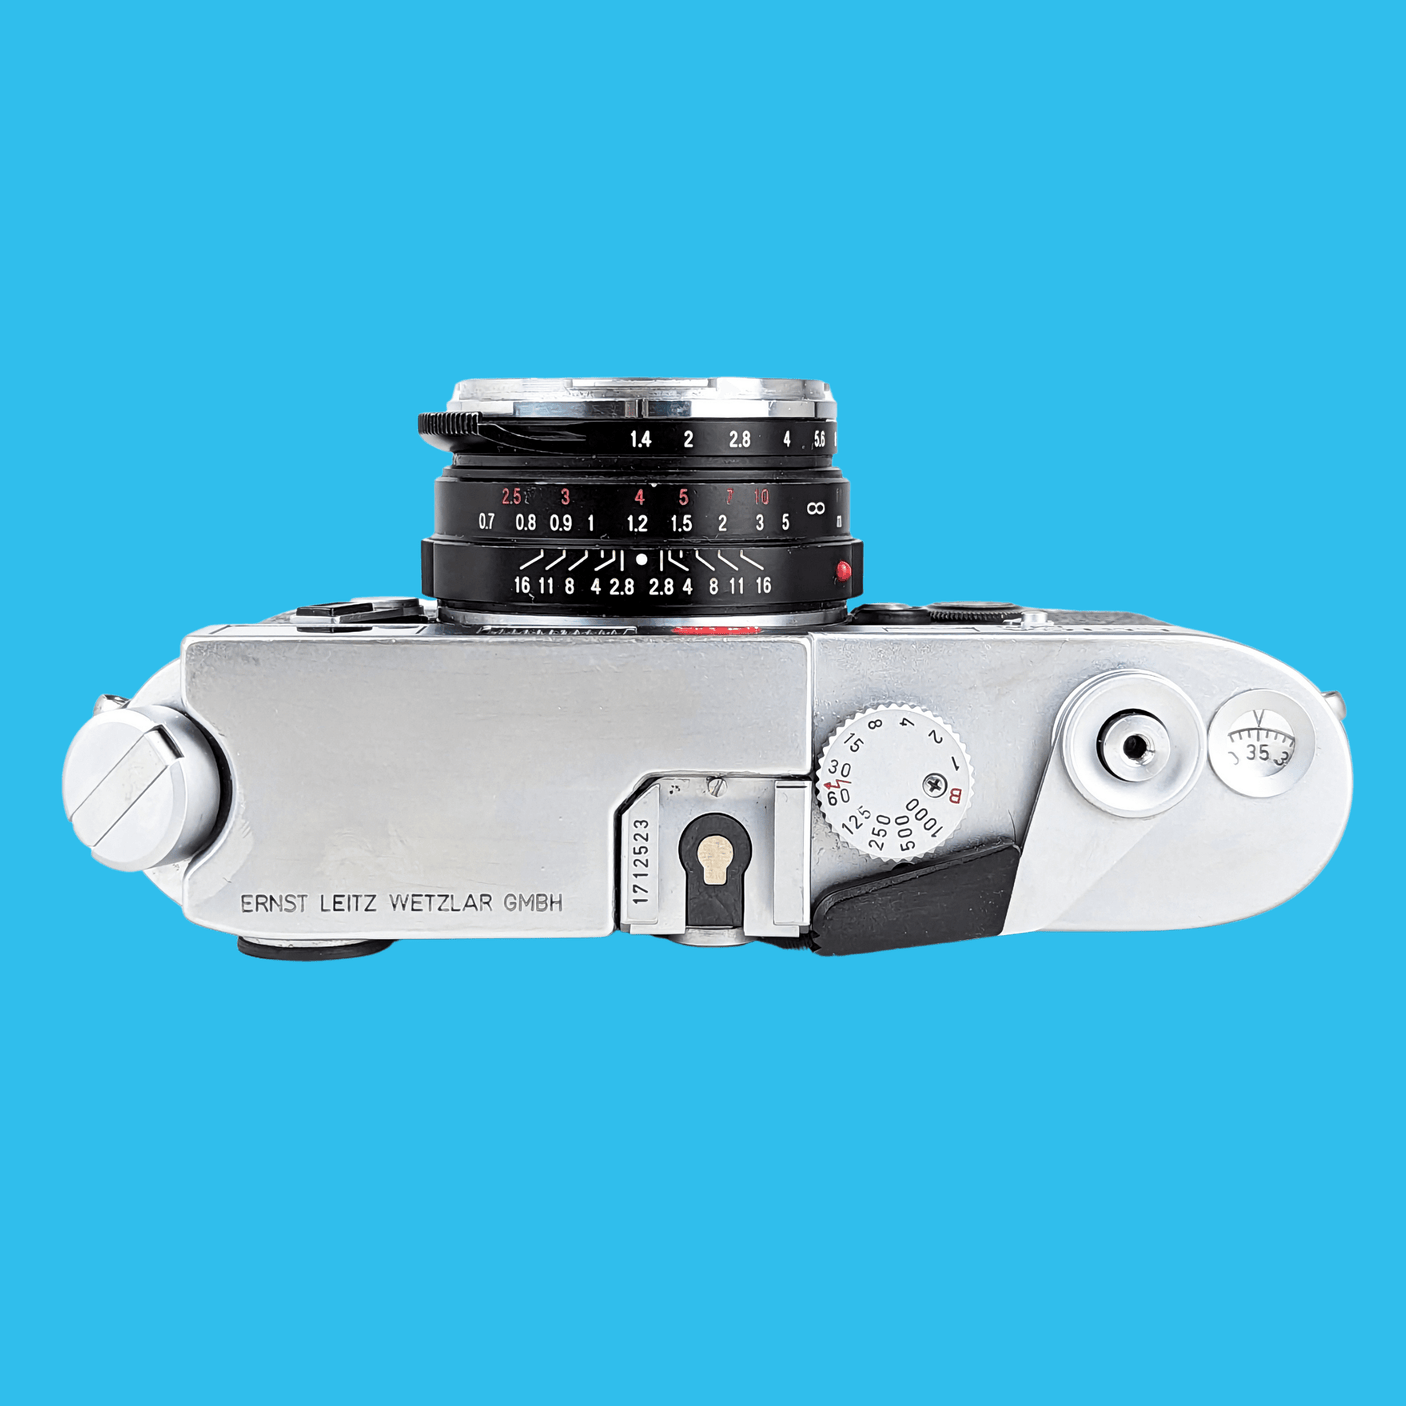 Leica M6 0.72 With Voigtländer 35mm F1.4 lens.